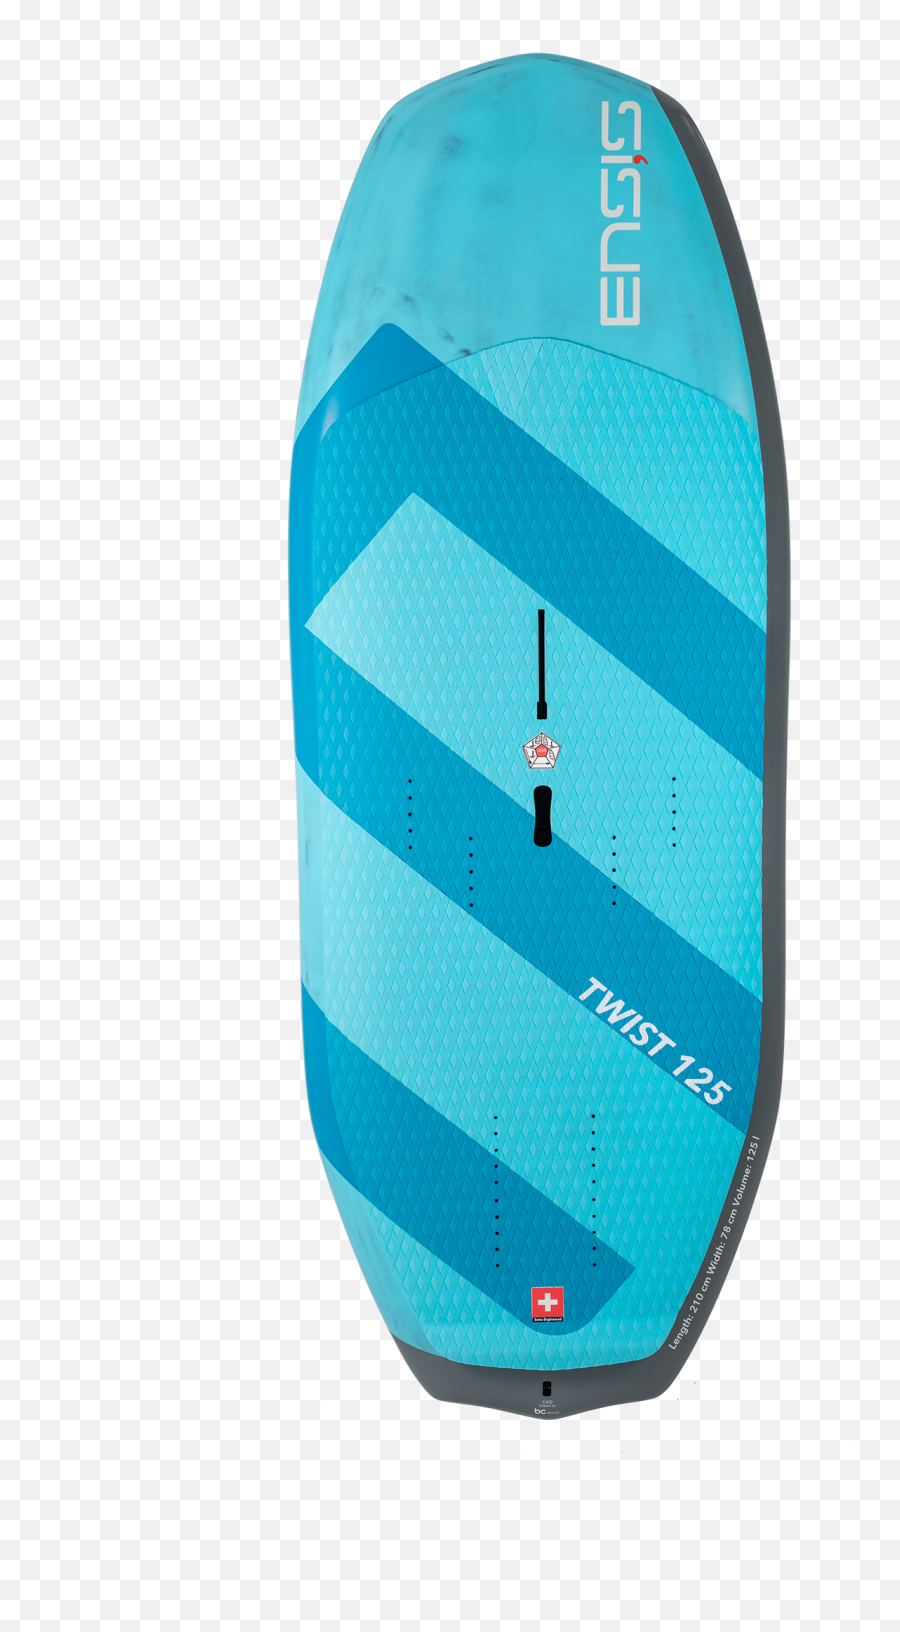 Ensis Twist 1board 5sports - Fanagus Ag Emoji,Emotion Steer Fin Surfboard